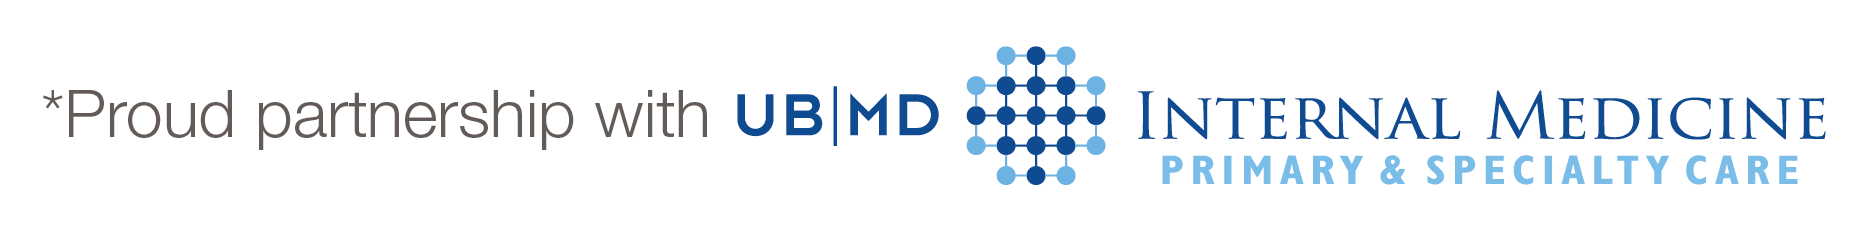 UBMD ProudPartnership Internal Medicine WEB